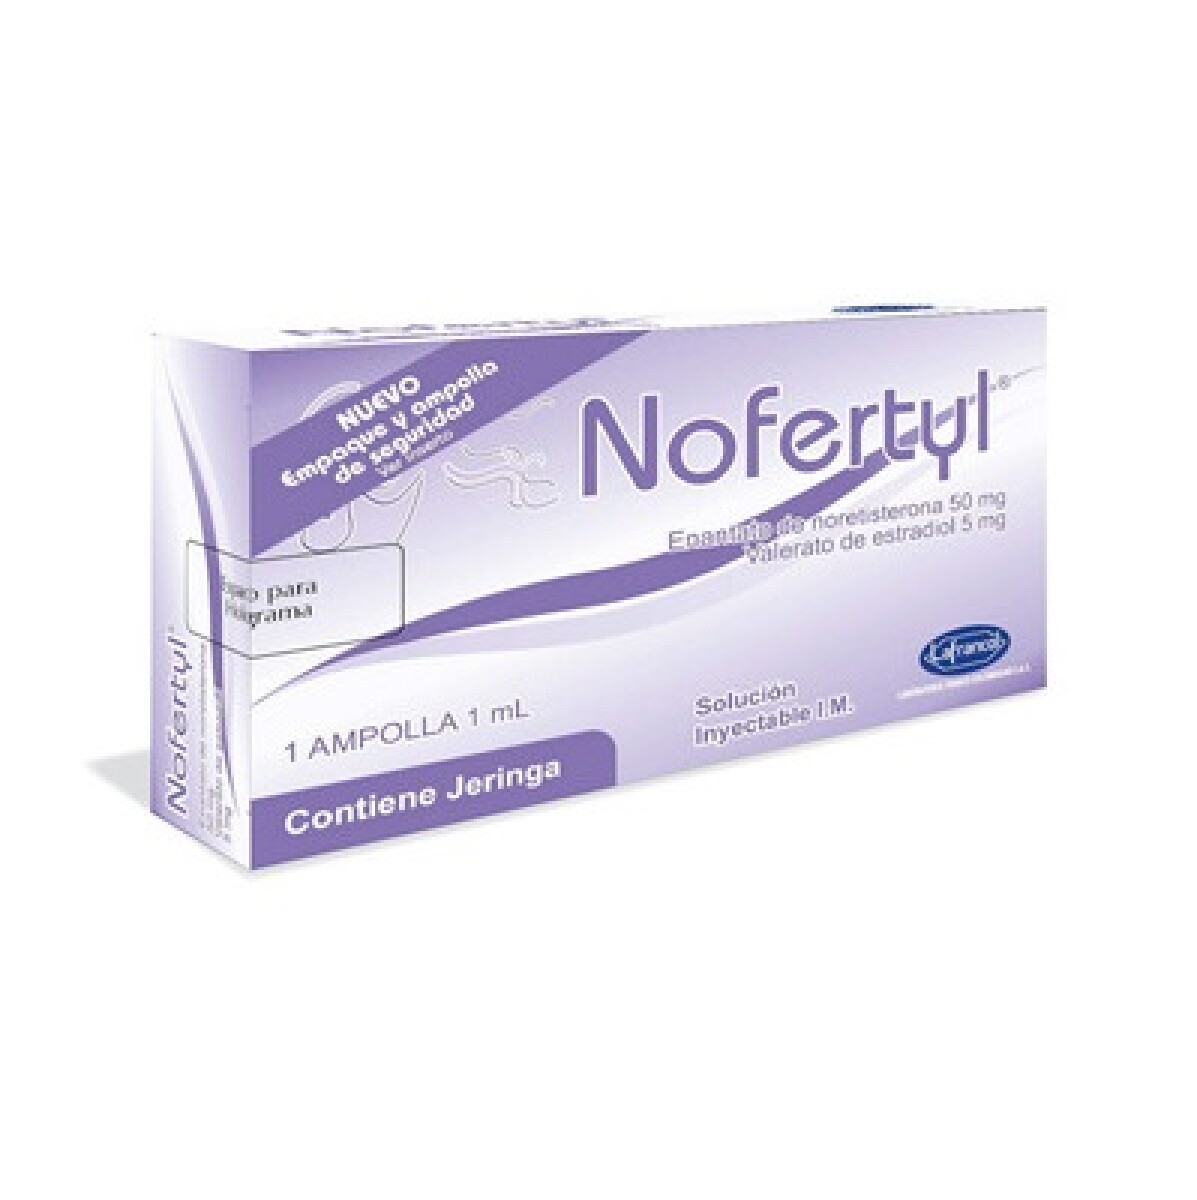 Nofertyl 1 Ml. 1 Ampolla 